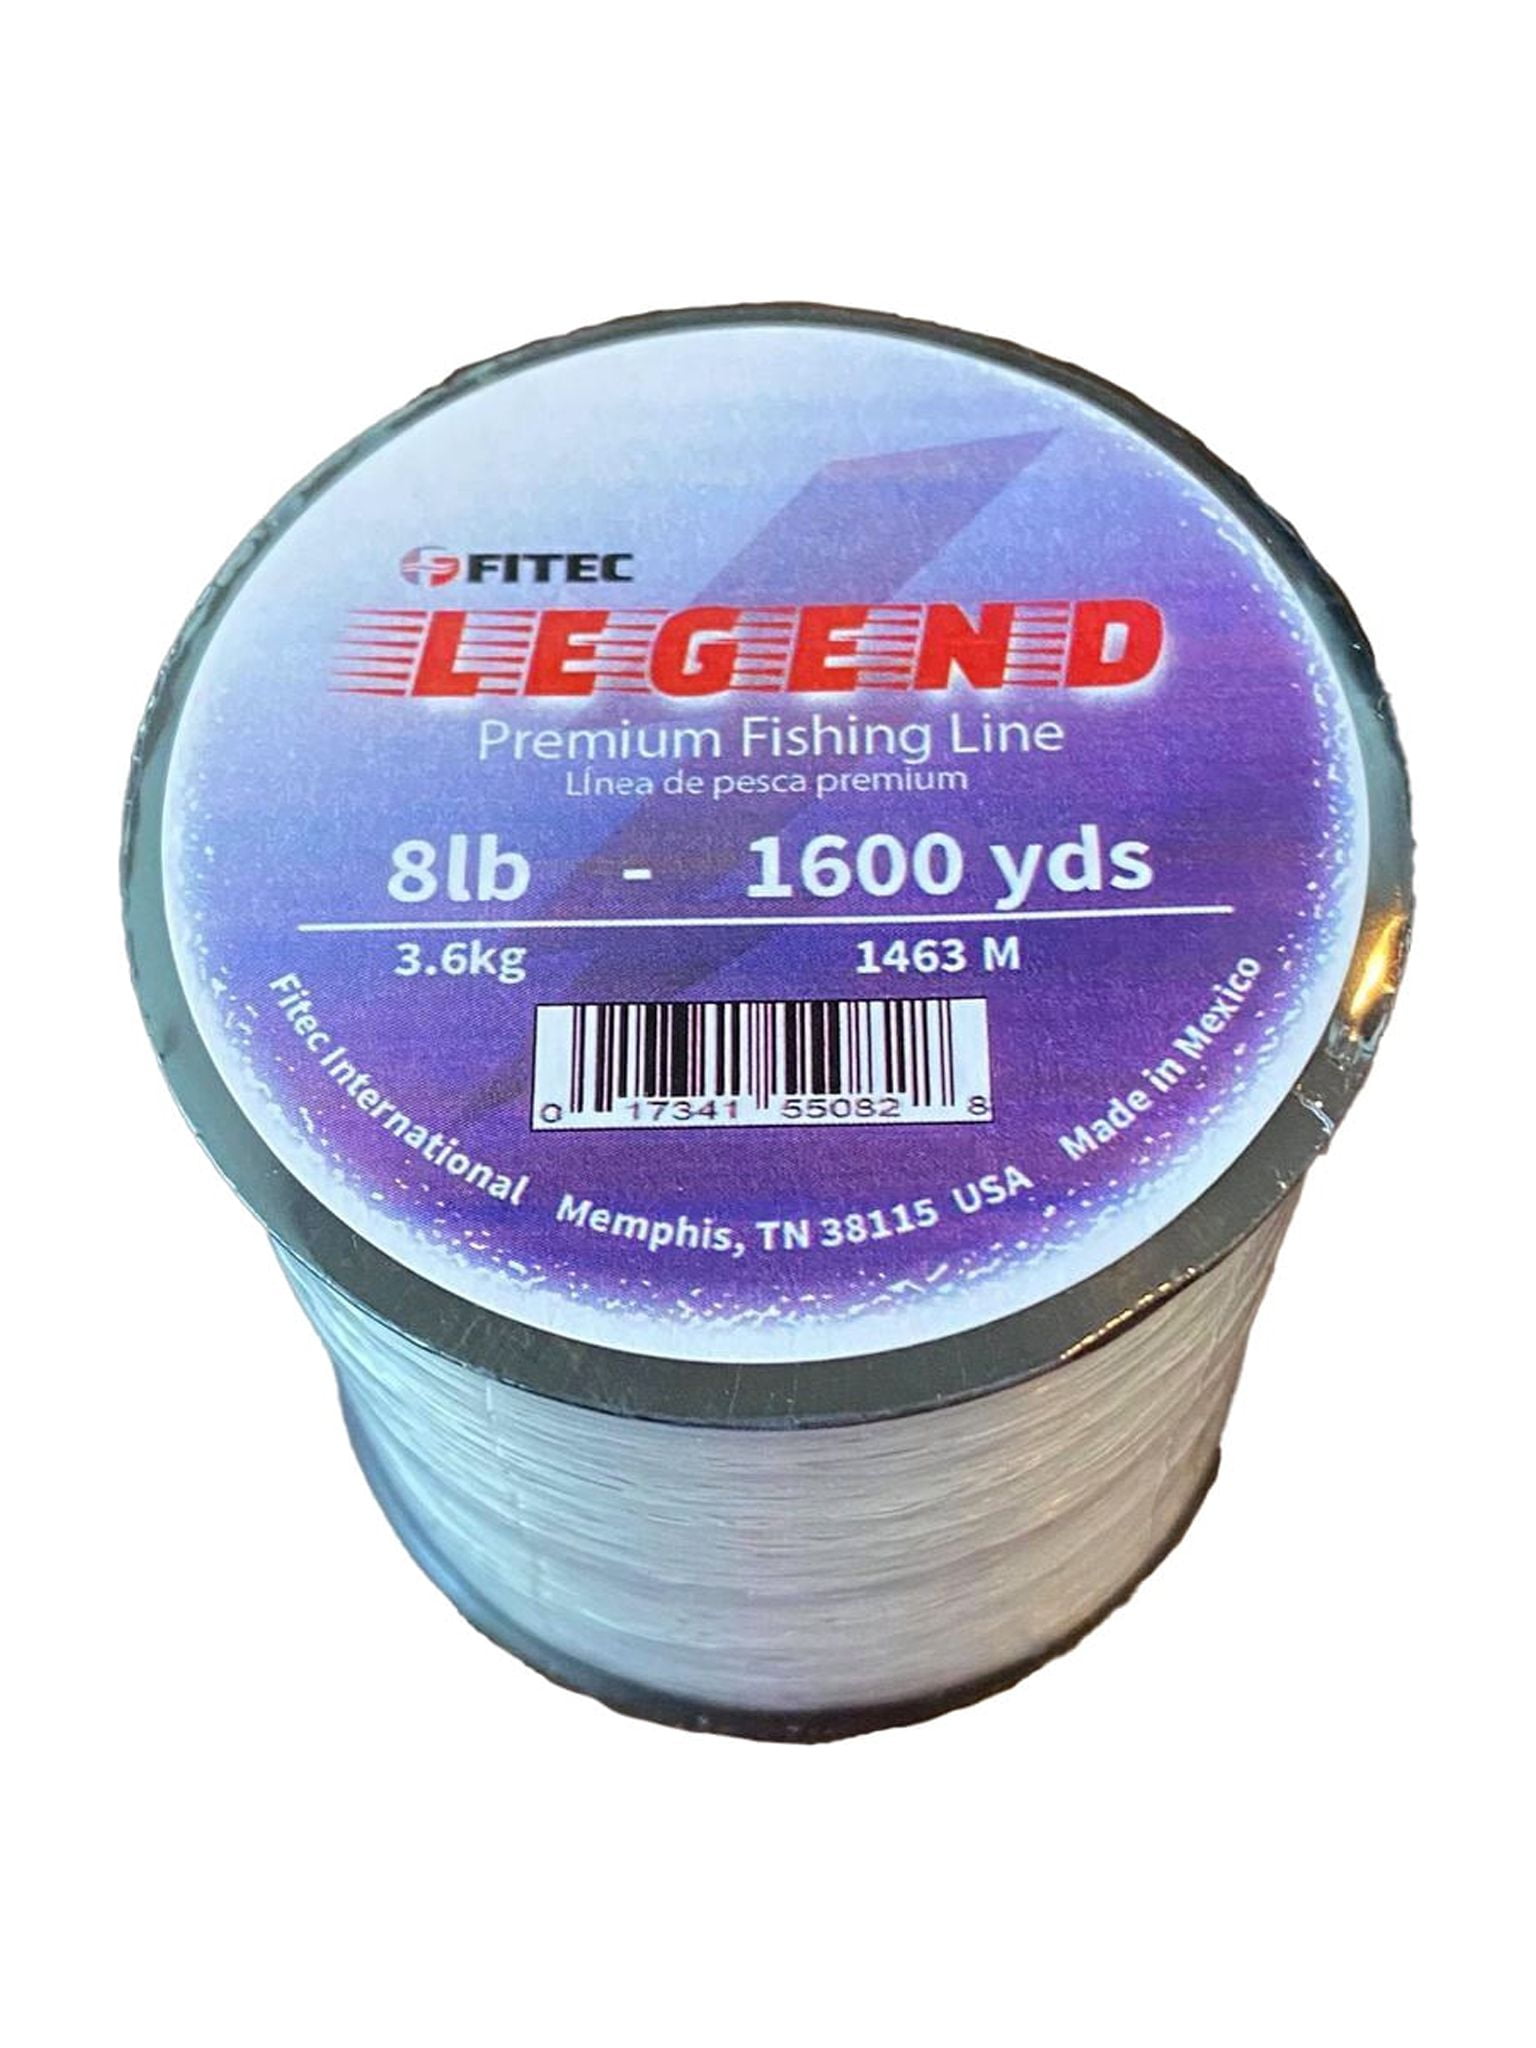 Fitec Legend Monofilament Premium Fishing Line - Clear - 1600 yd